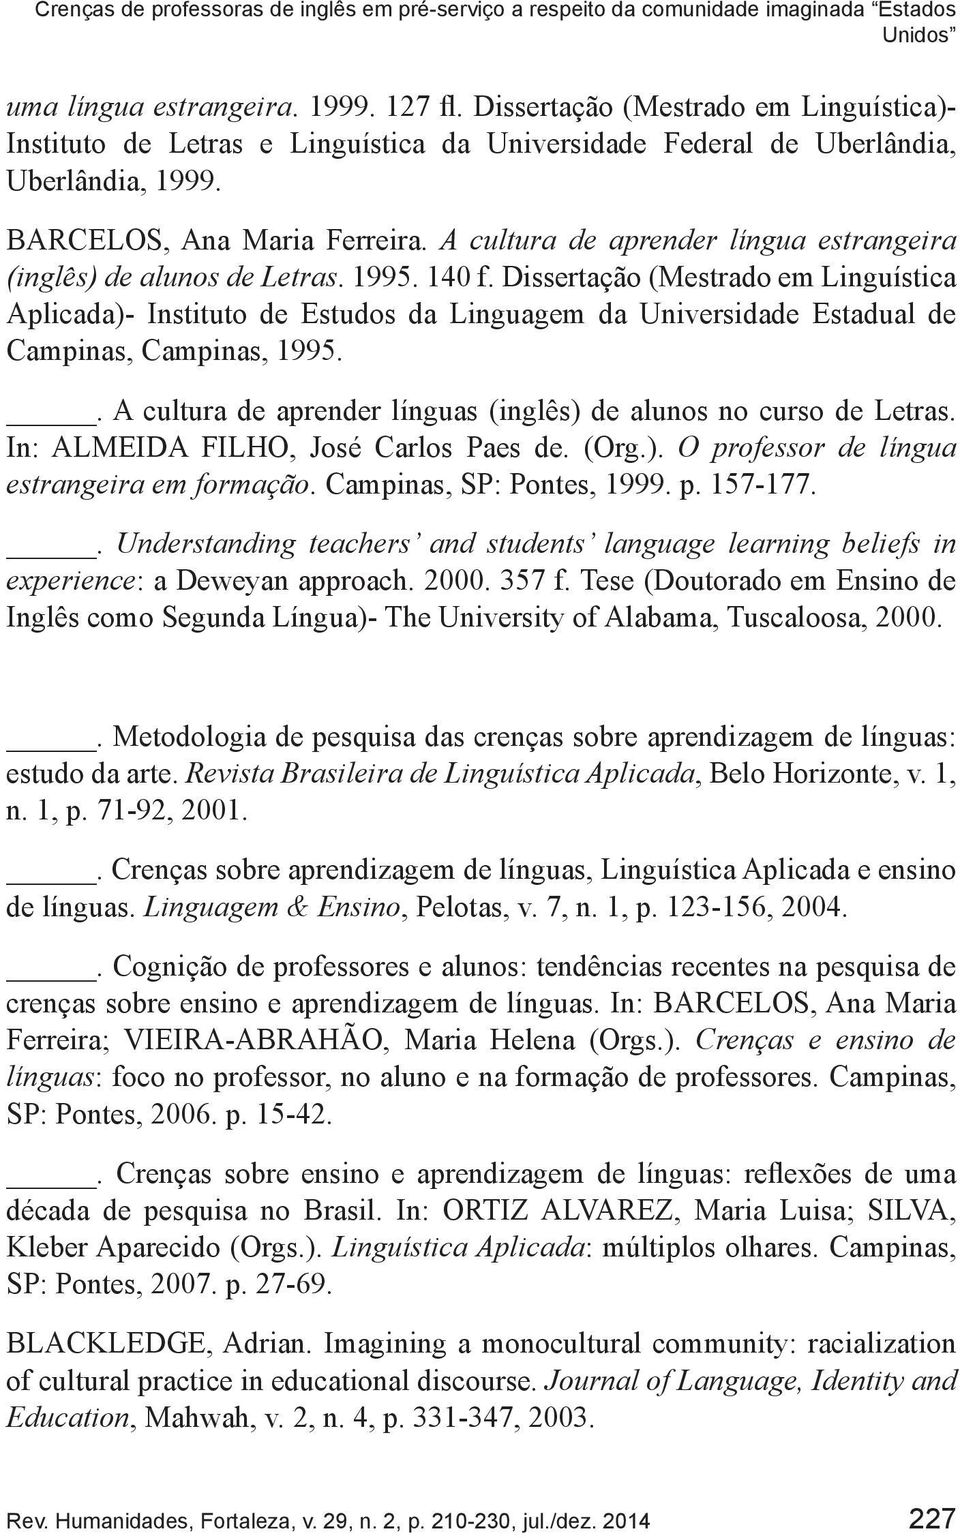 A cultura de aprender língua estrangeira (inglês) de alunos de Letras. 1995. 140 f.